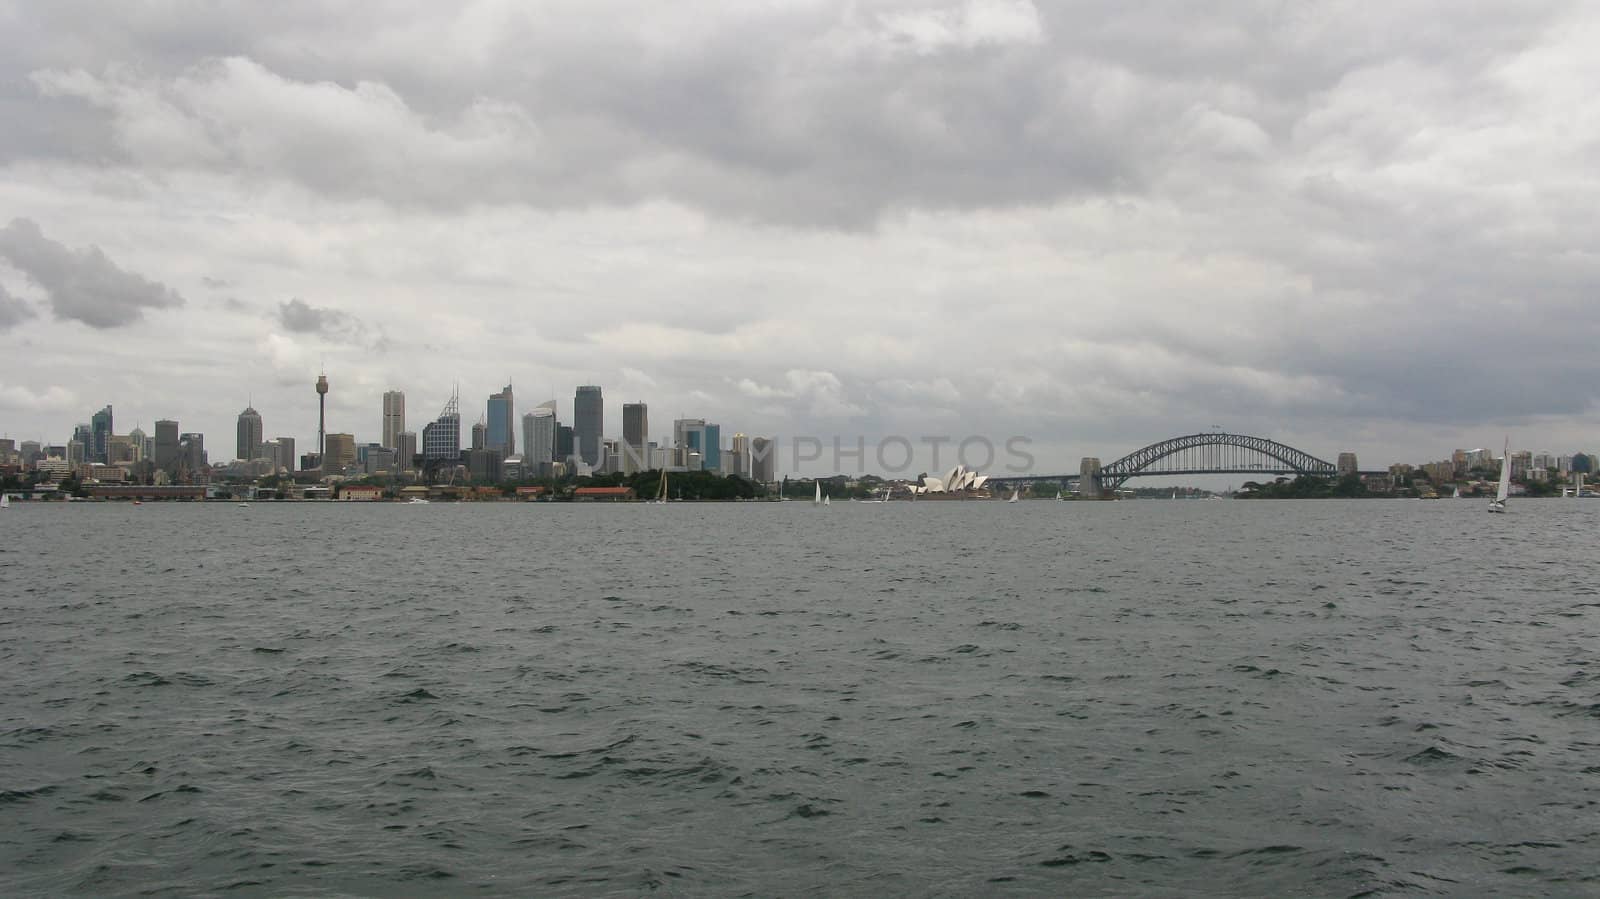 view of the Sydney skyline with skyscrapers, habor bridge, opera, australia